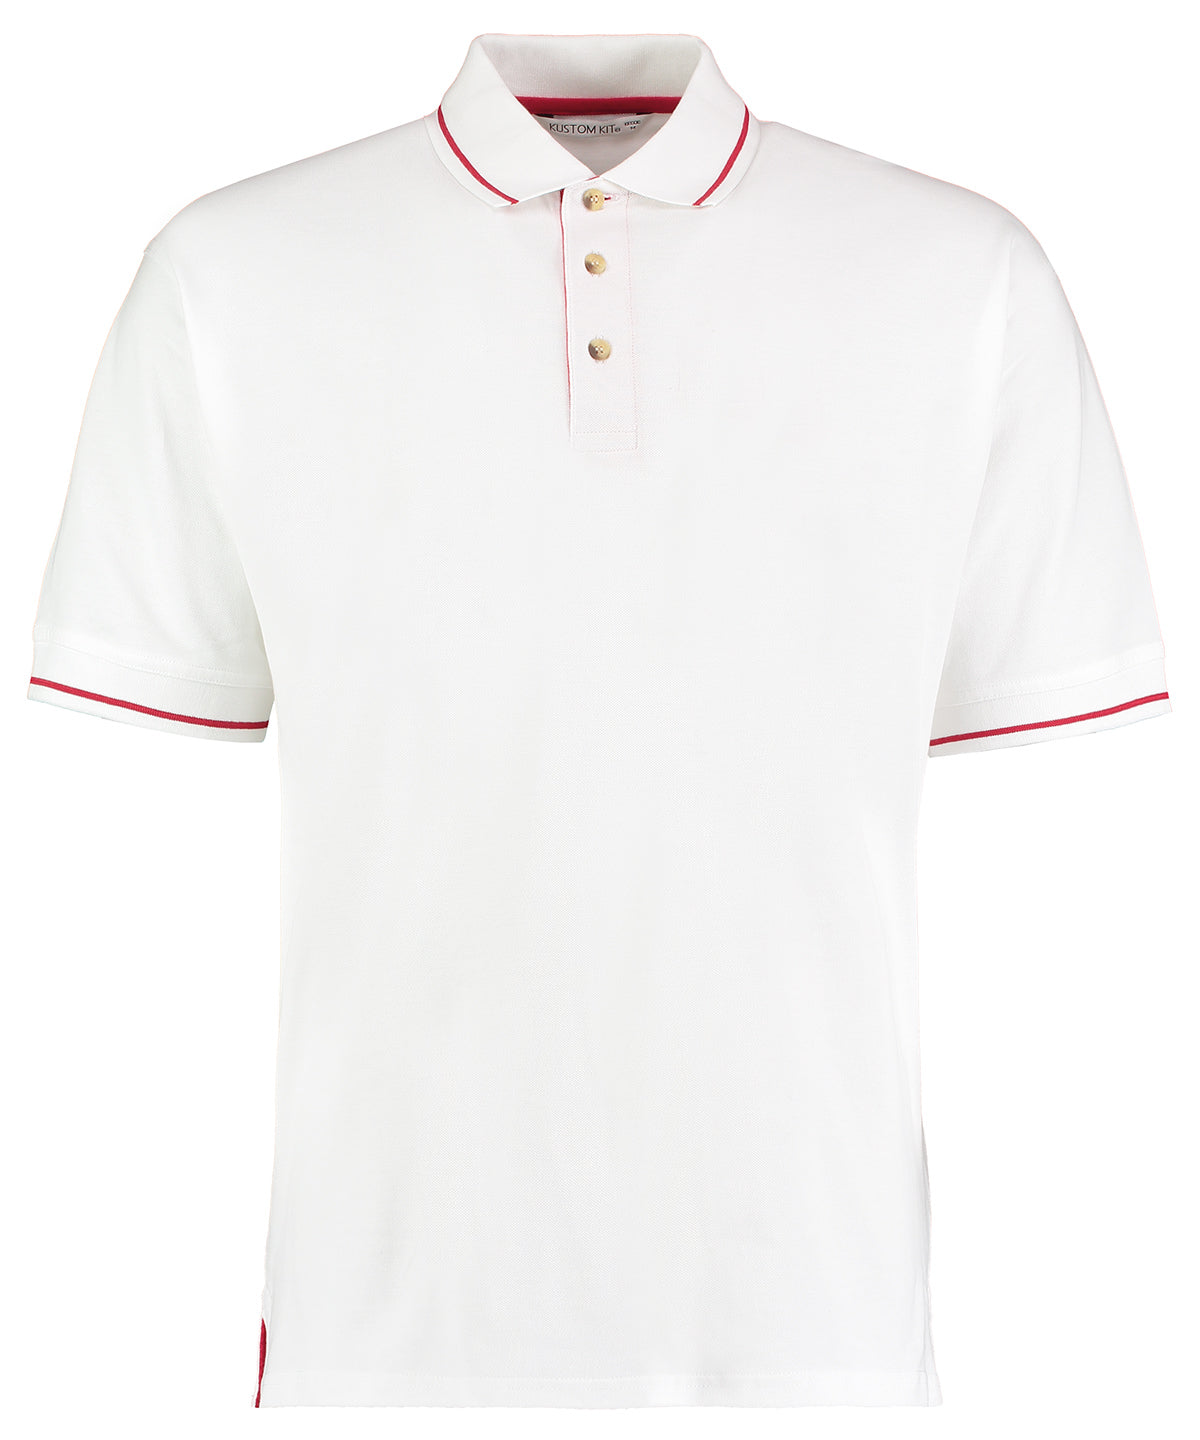 Personalised Polo Shirts - Black Kustom Kit St Mellion polo (classic fit)